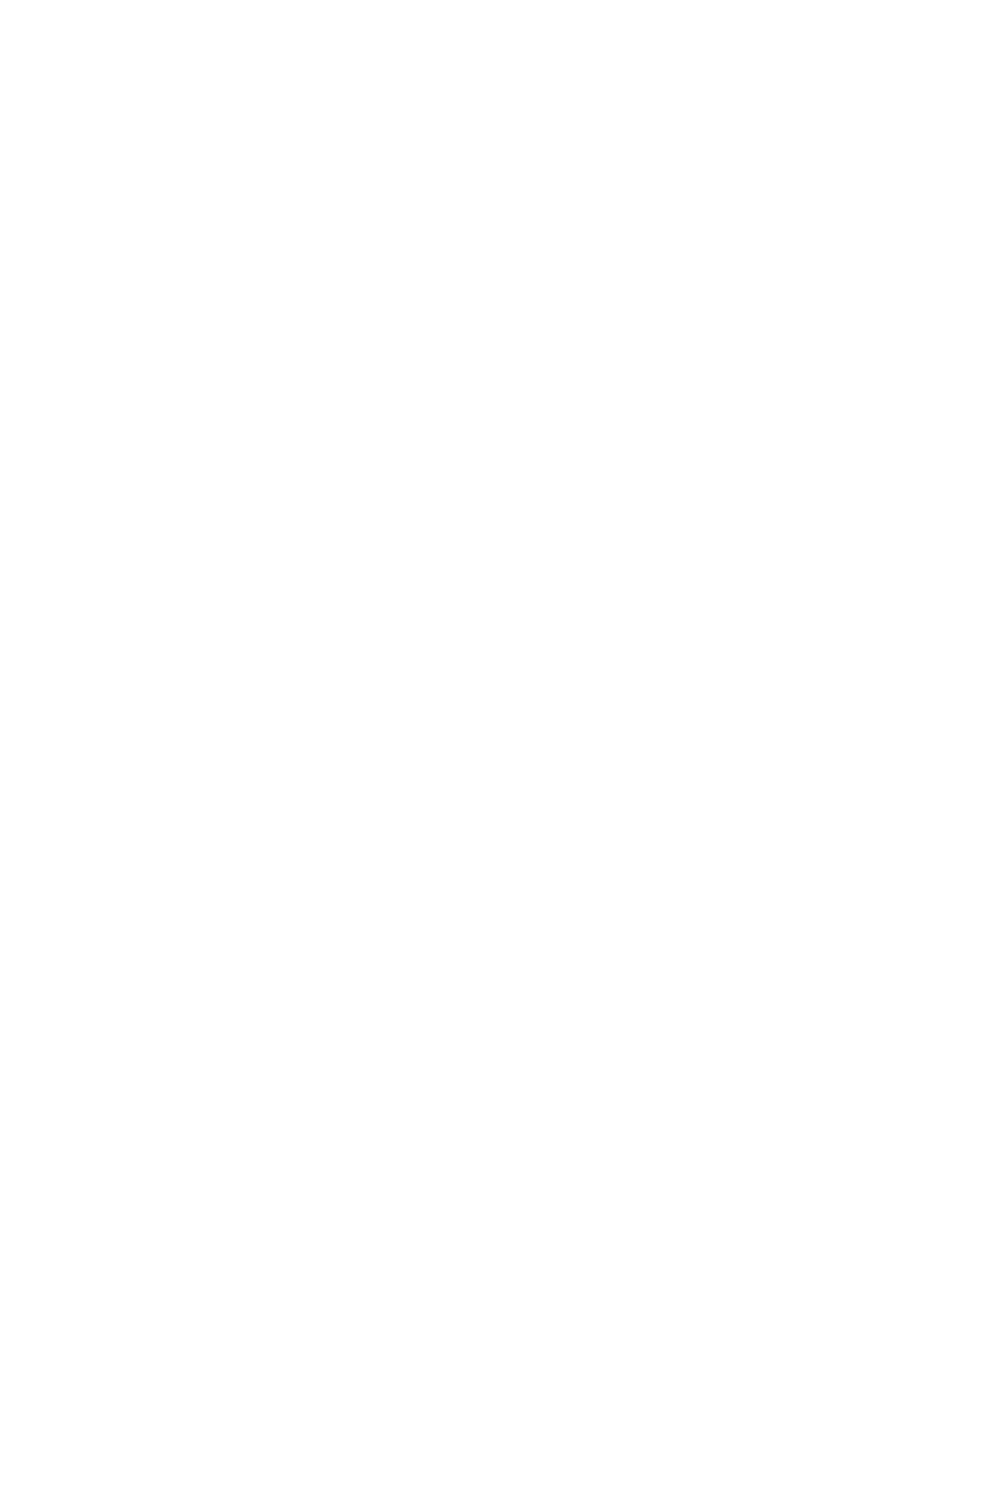 Buenaventura Mining Company  logo pour fonds sombres (PNG transparent)